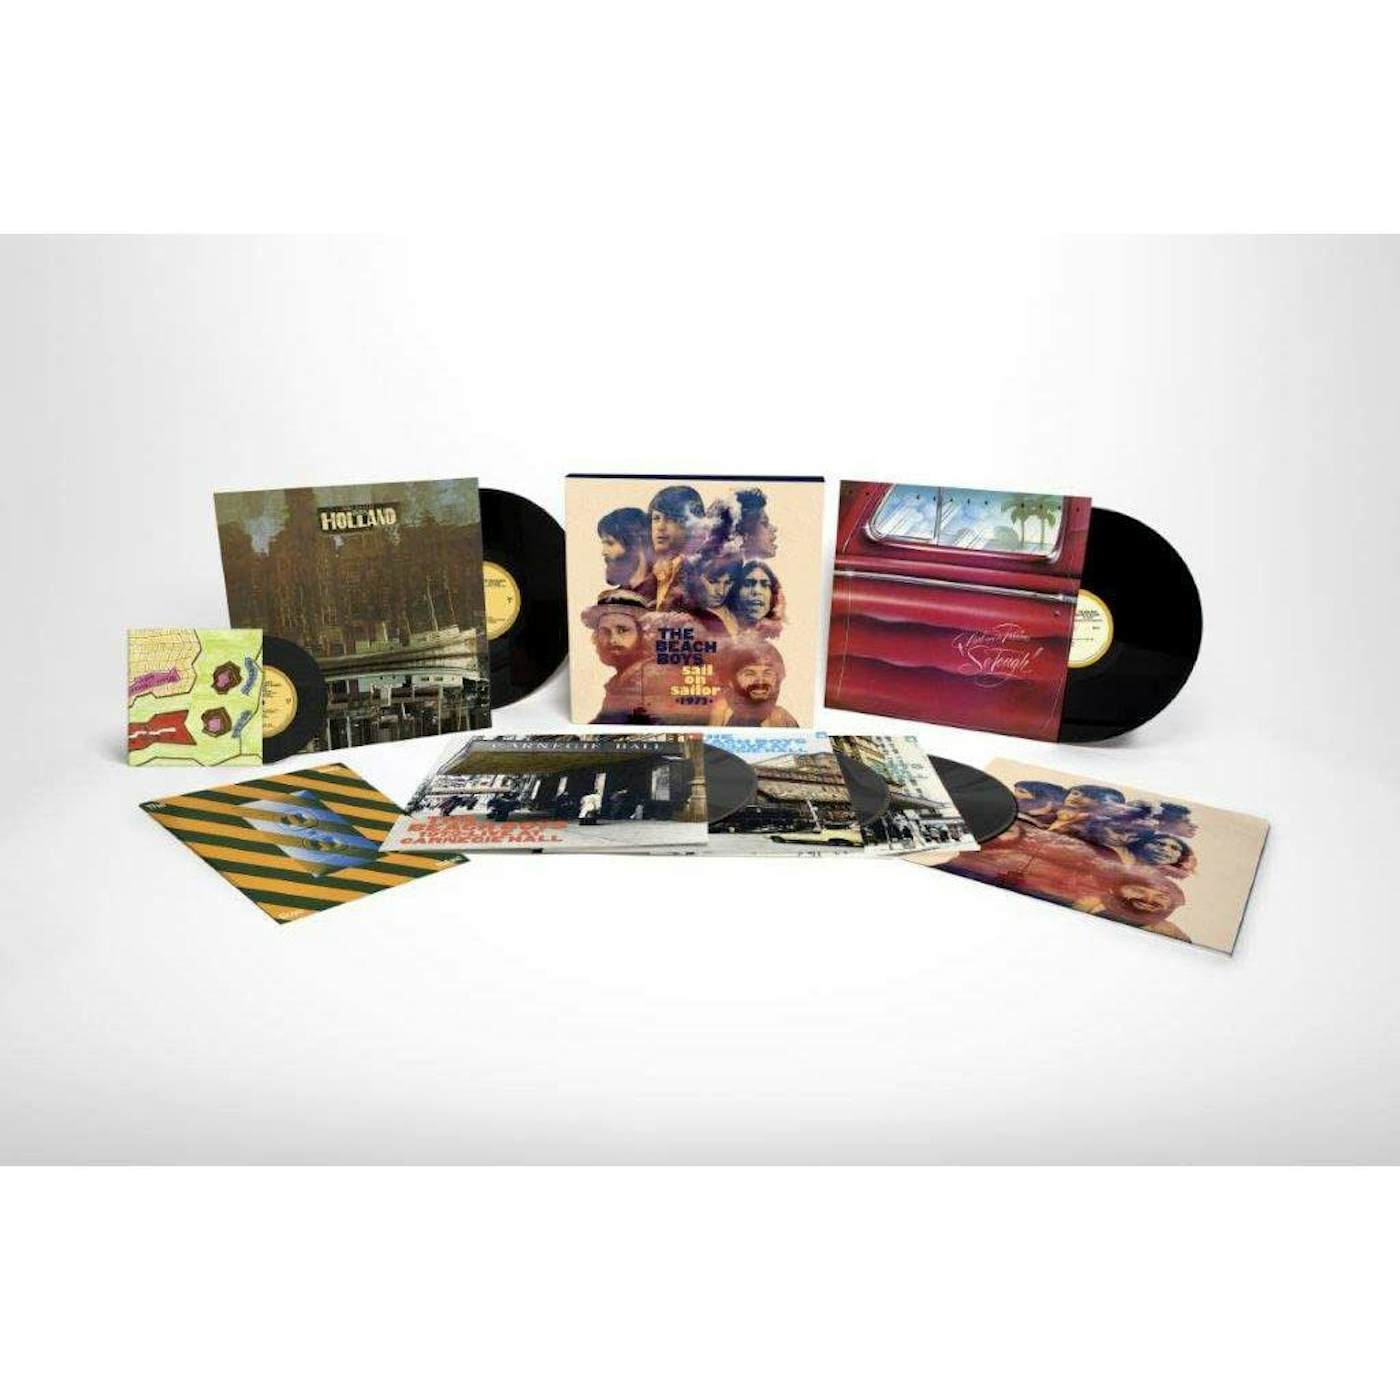 The Beach Boys Sail On Sailor (Super Deluxe / 5LP Box Set / 45 RPM / 7") (Vinyl)